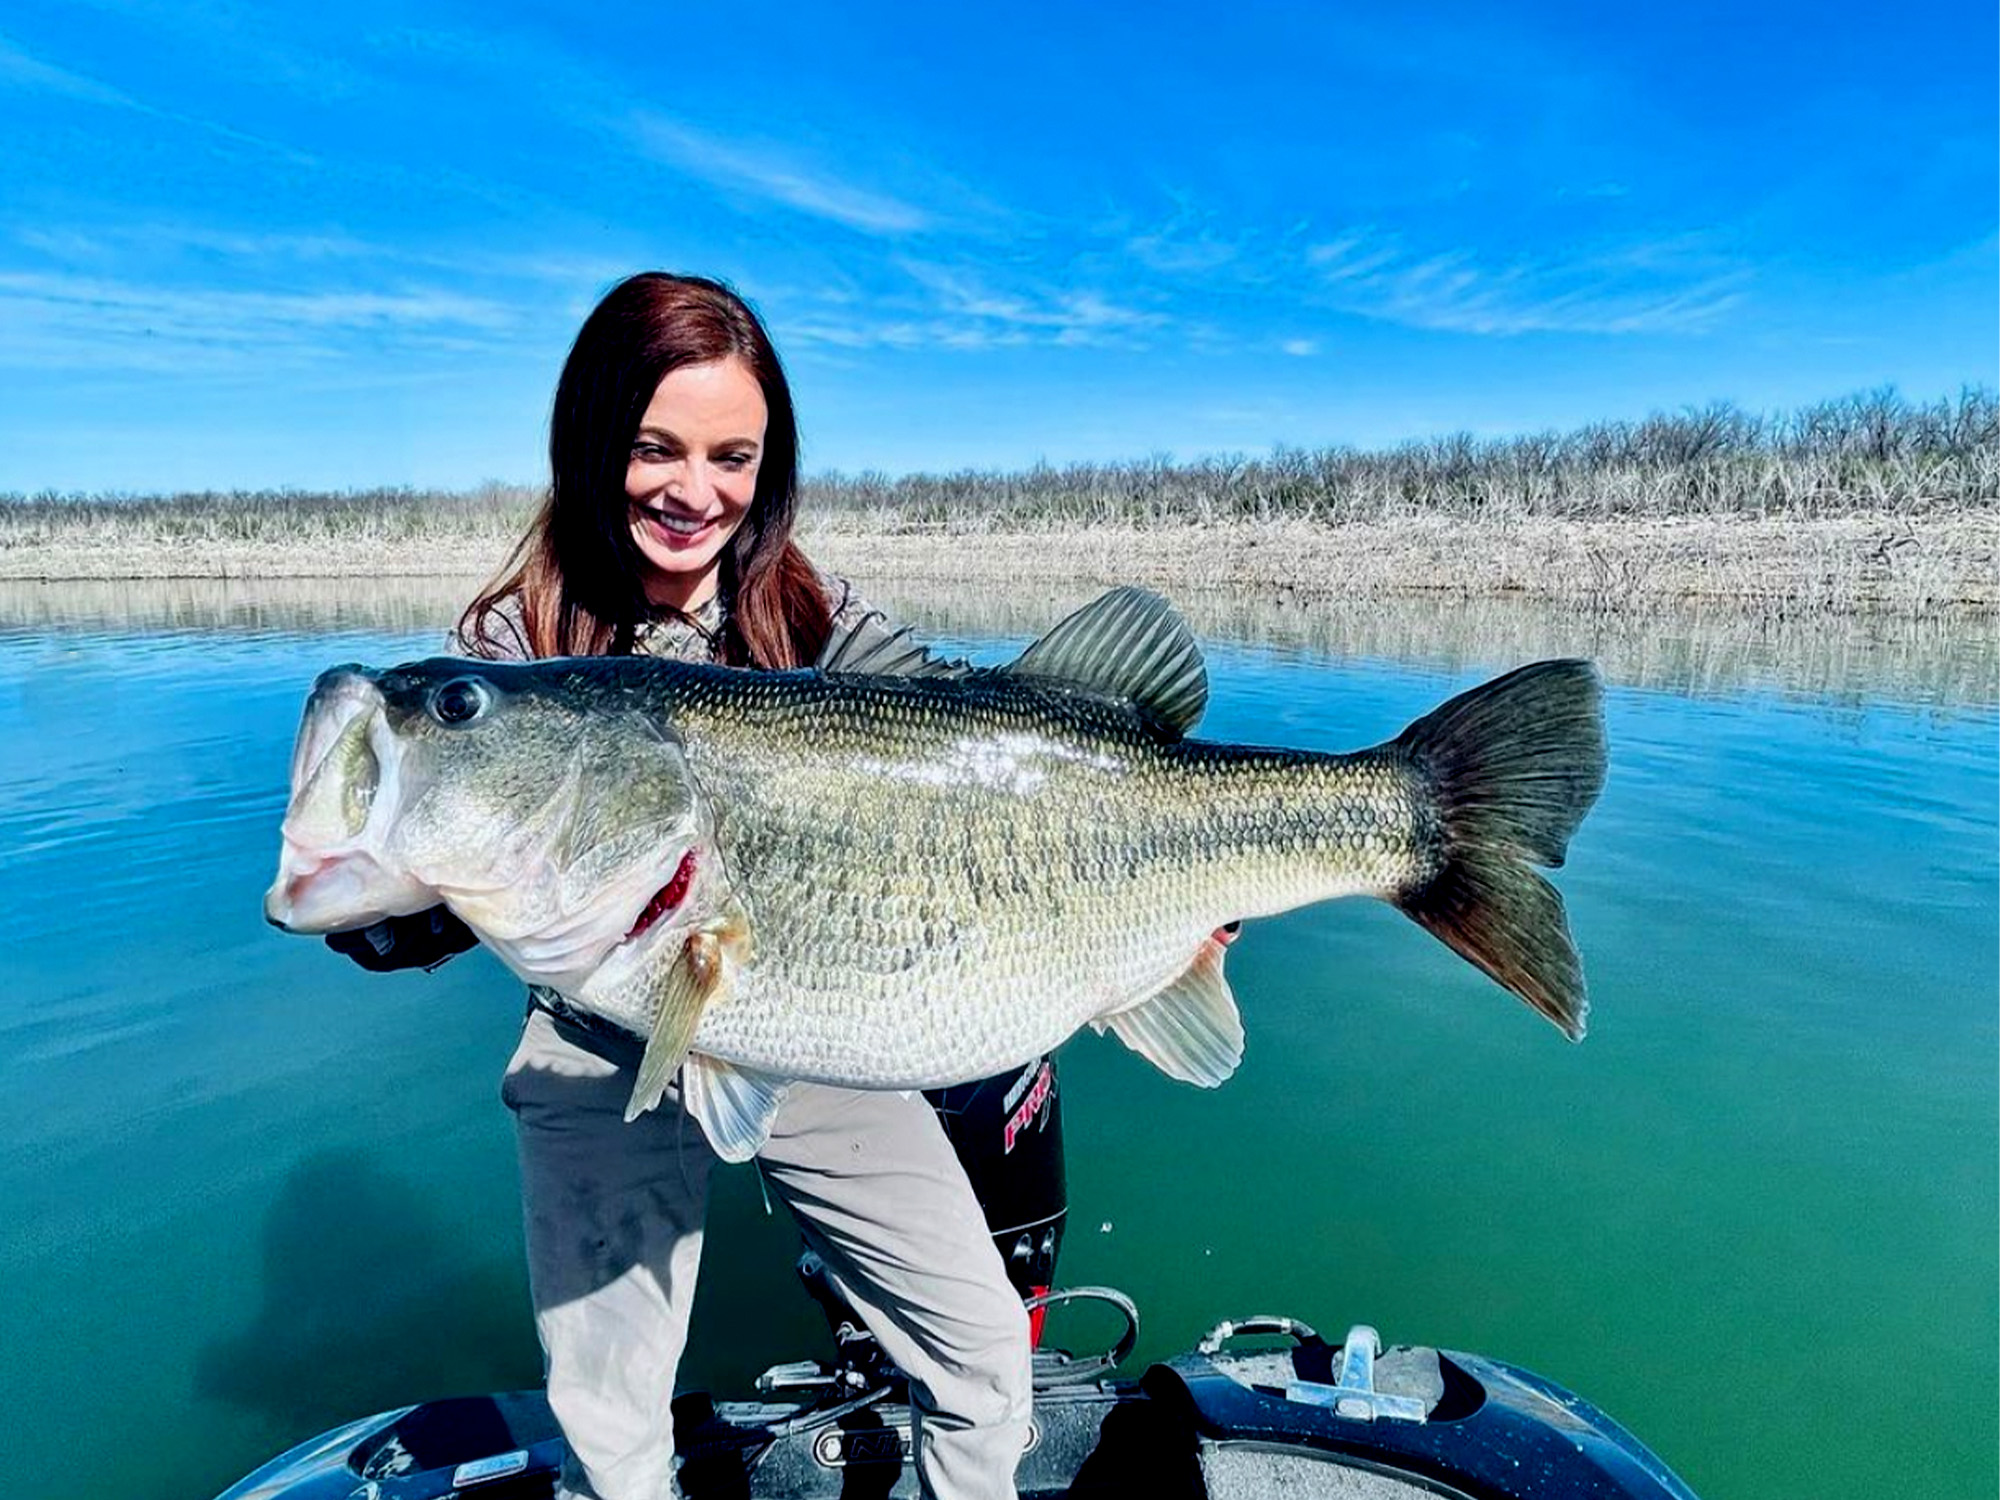 Texas Angler's Bass Officially a New World Record